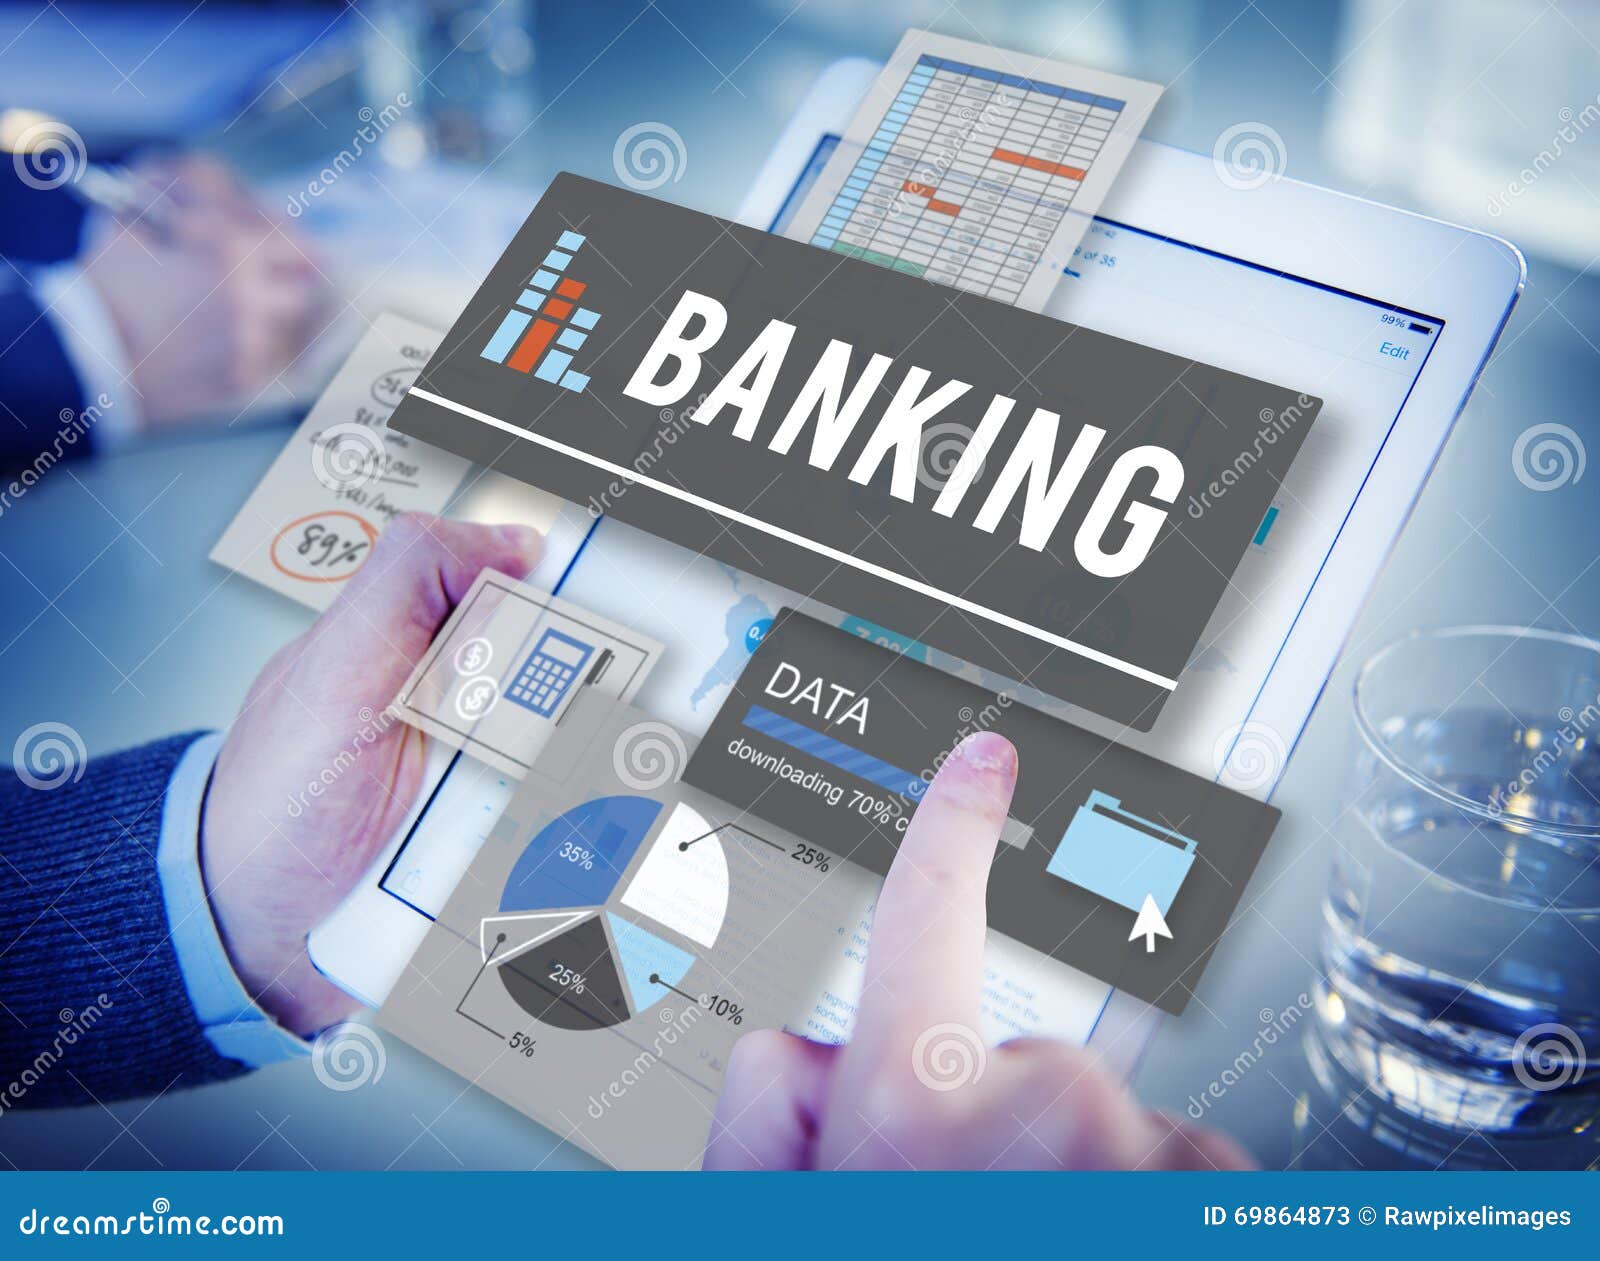 banking finance savings management concept